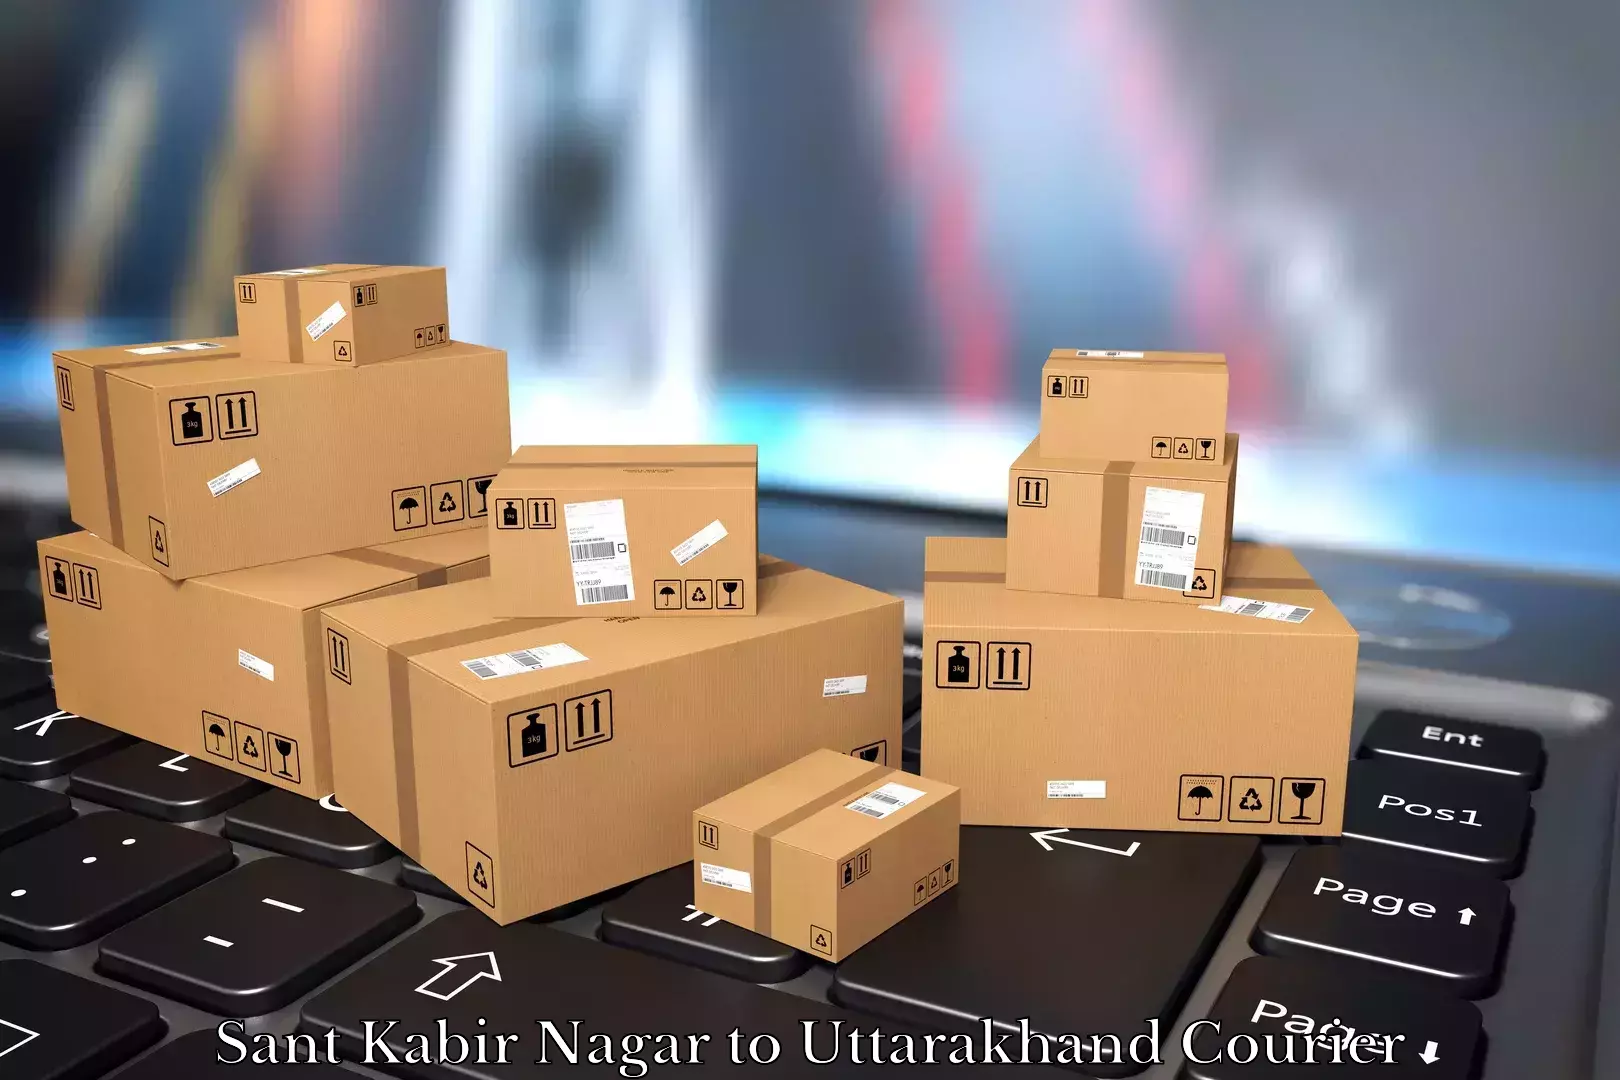 Professional moving company Sant Kabir Nagar to Mussoorie